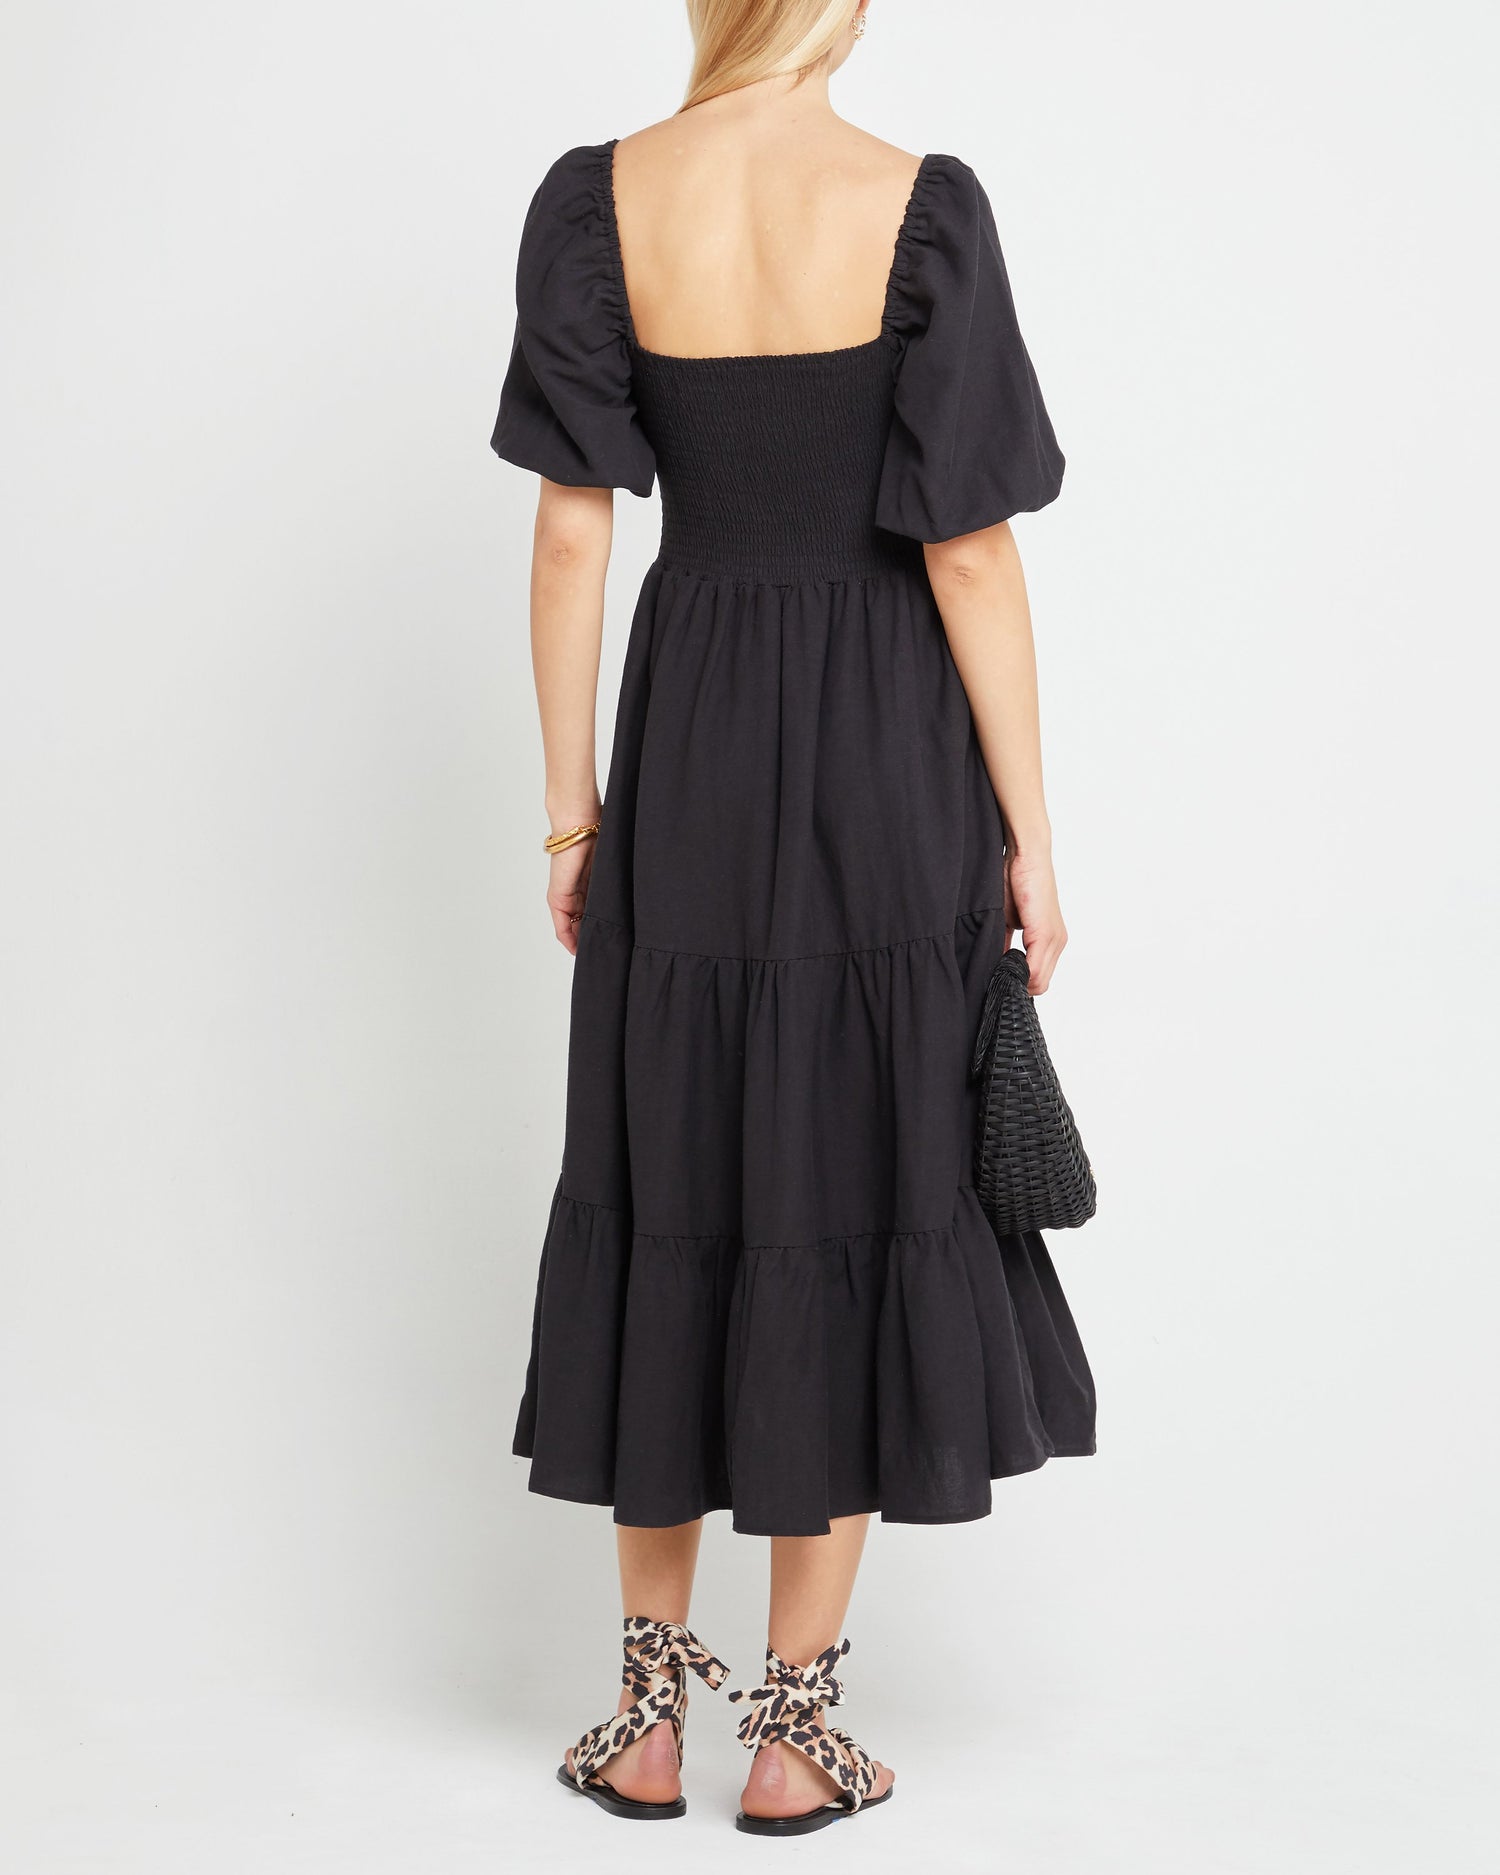 Second image of Hera Dress, a black midi dress, smocked, puff sleeves, cap sleeves